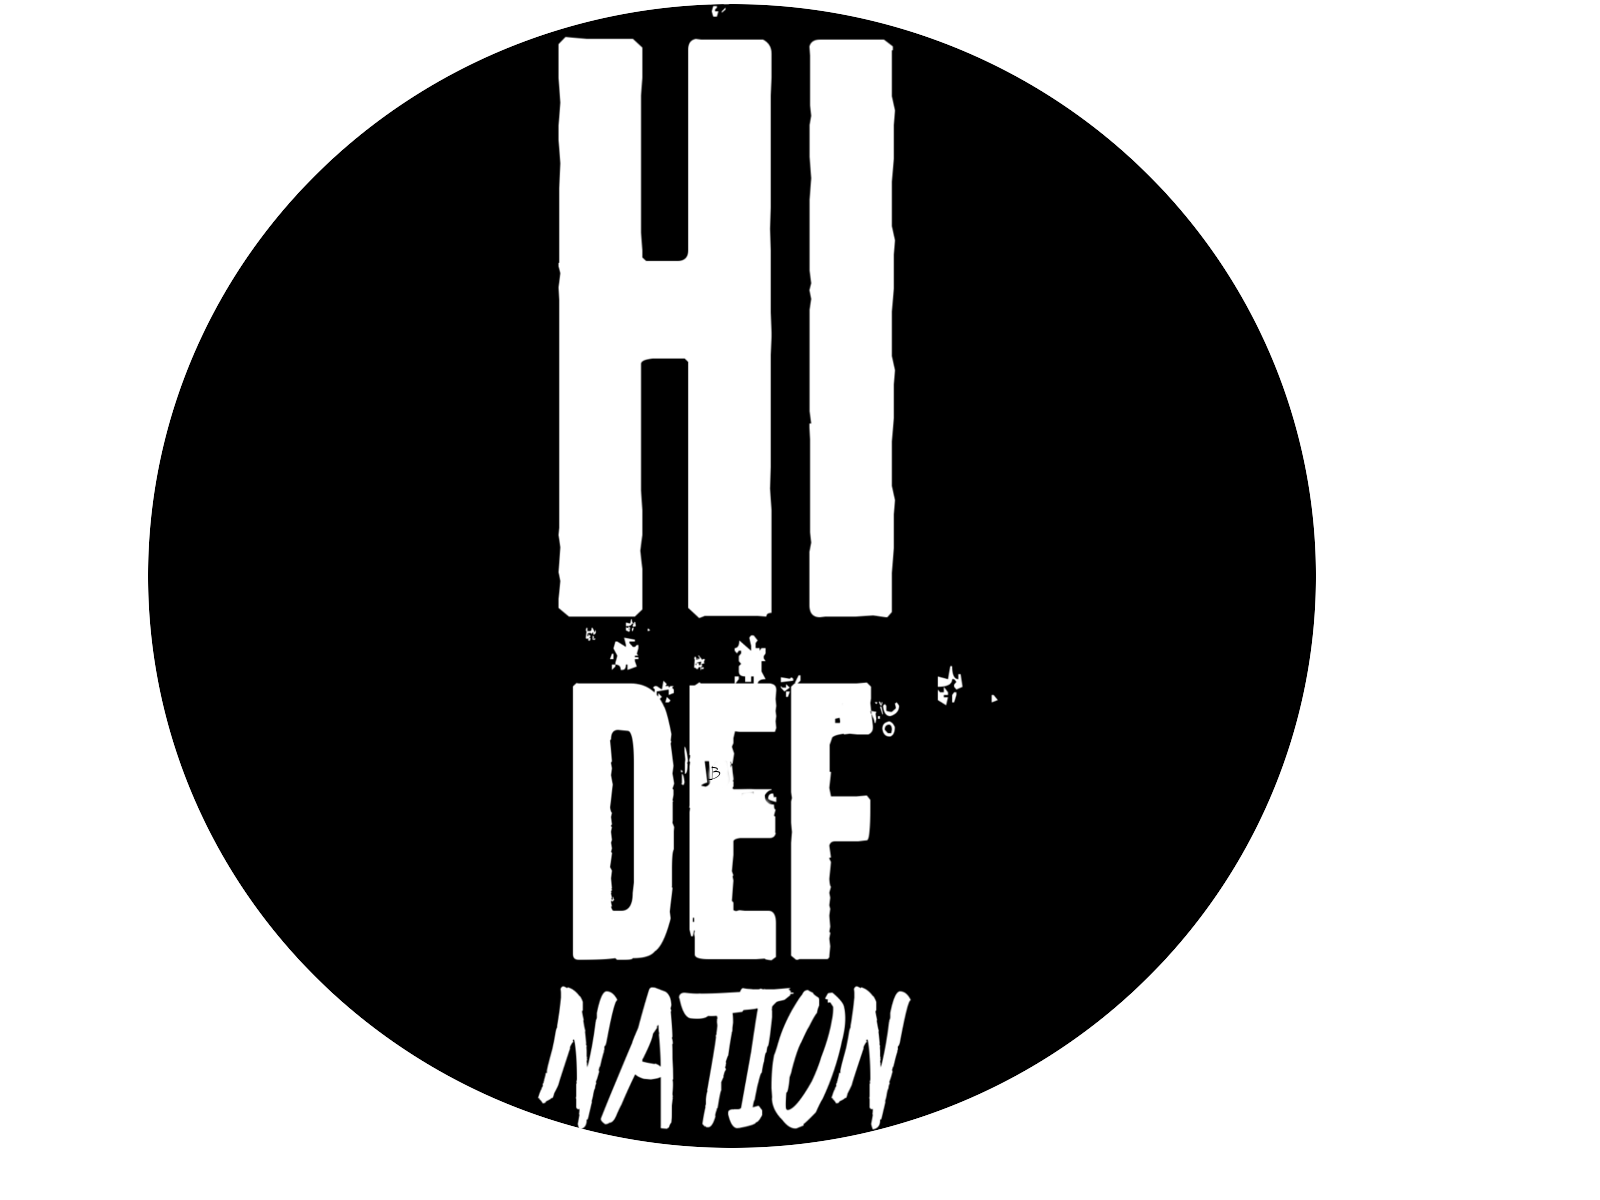 Hidef Nation